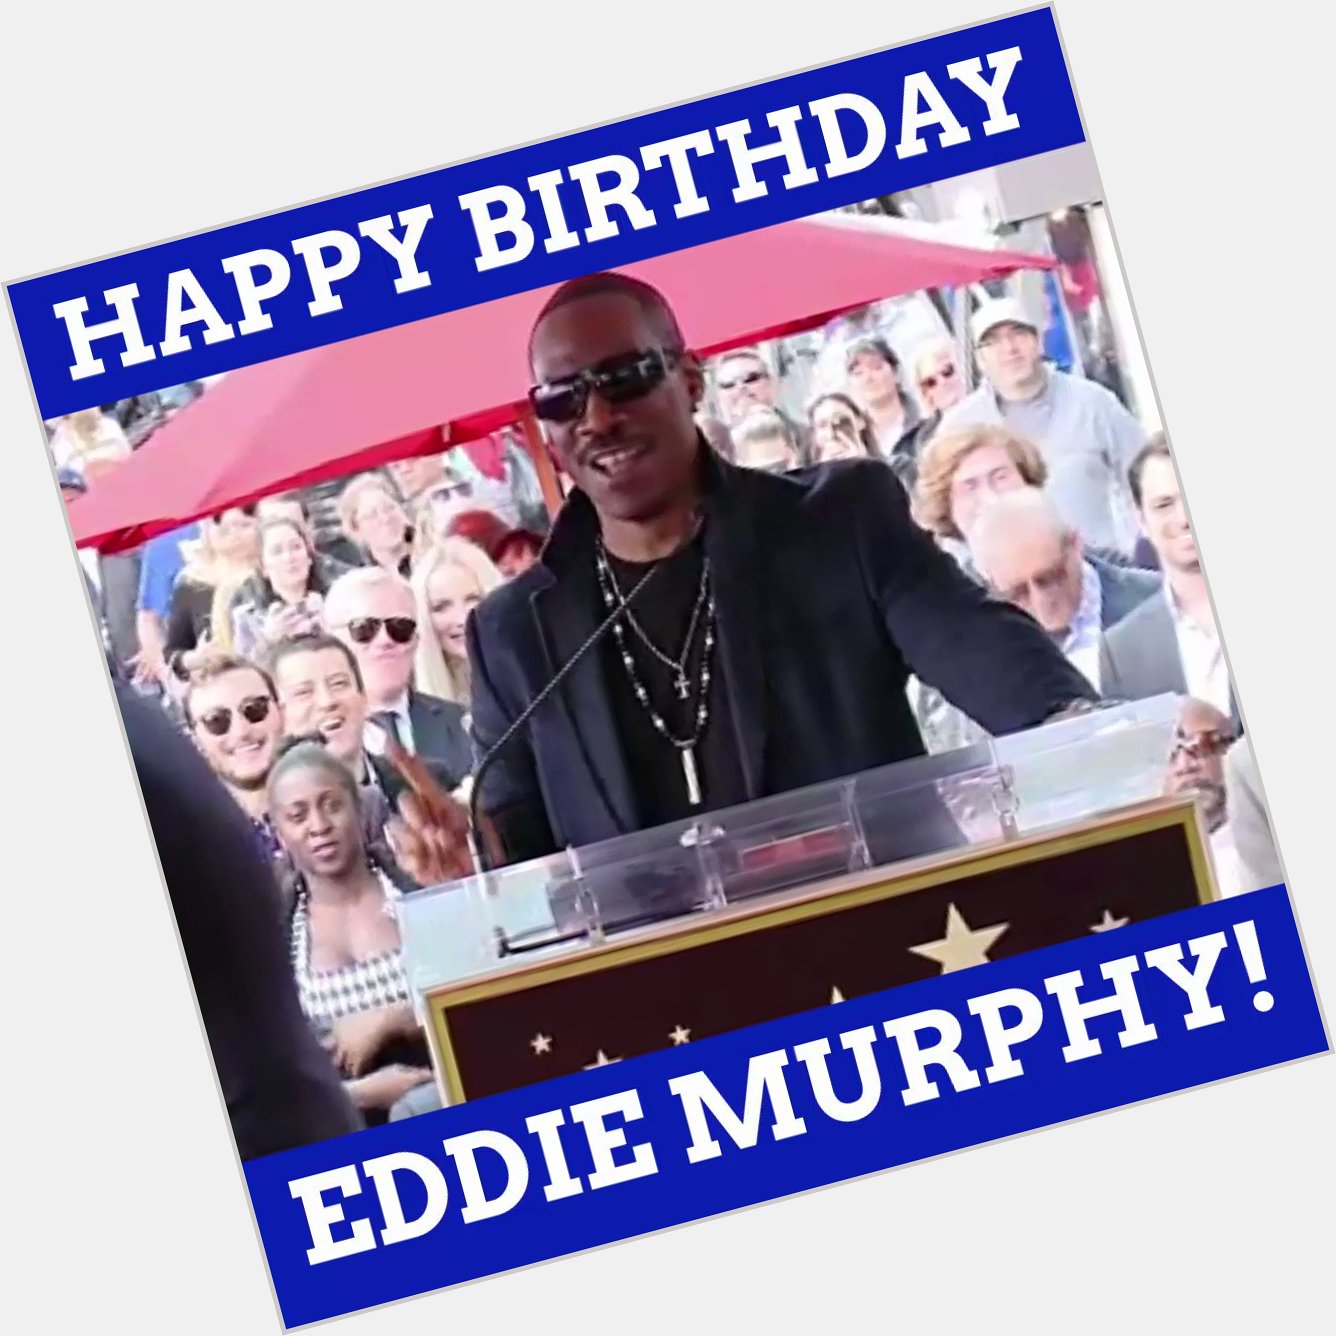 Happy birthday, Eddie Murphy!  